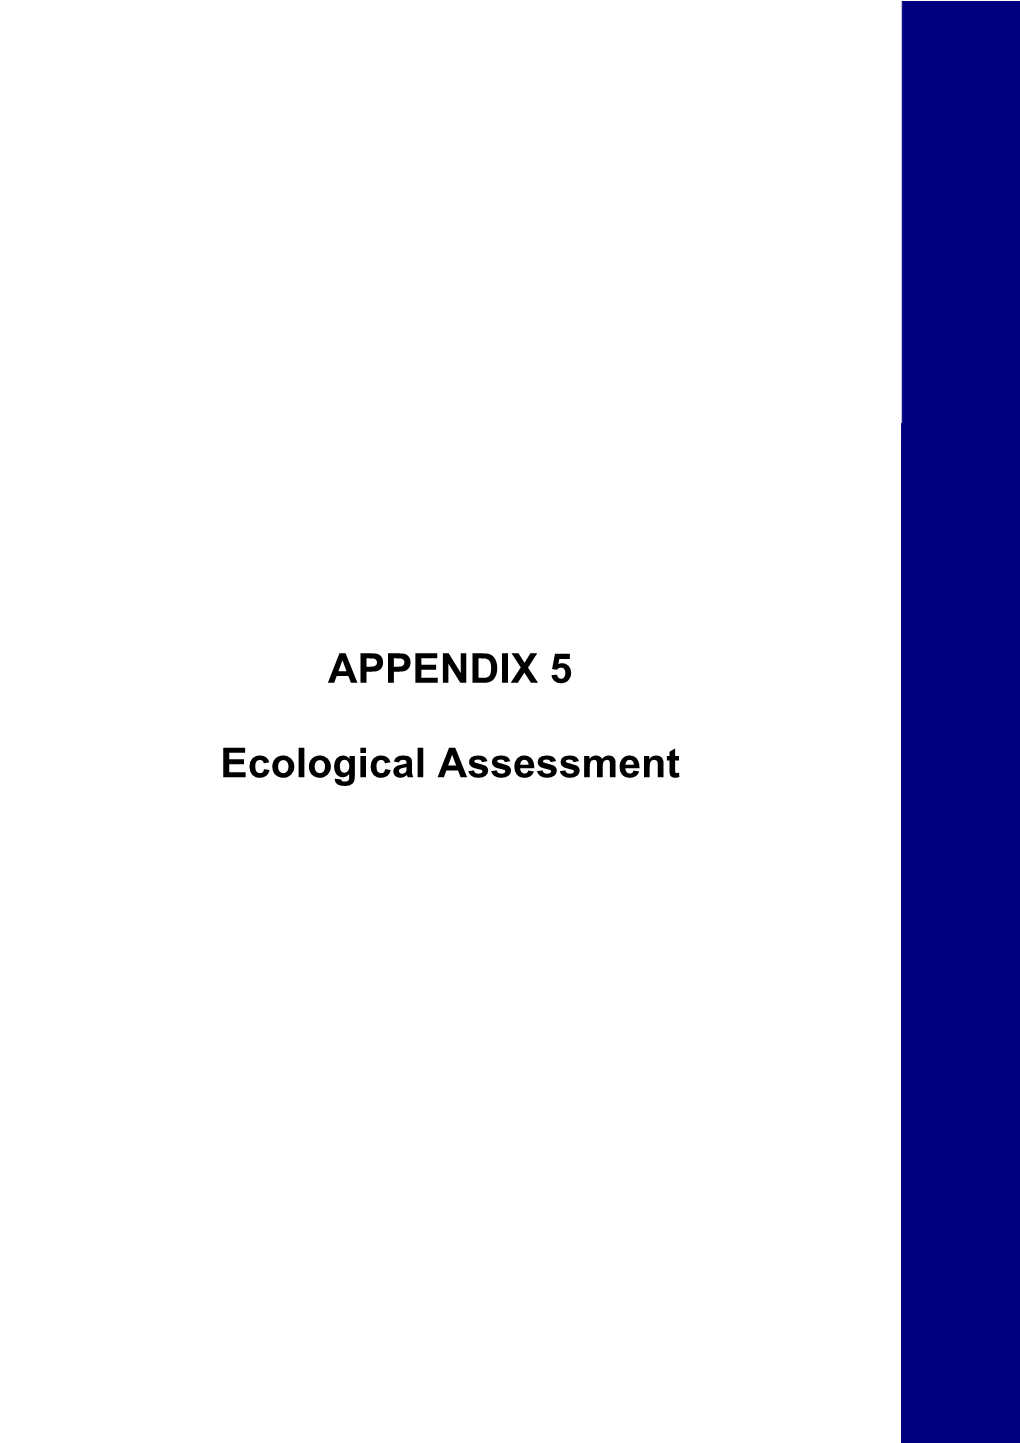 APPENDIX 5 Ecological Assessment